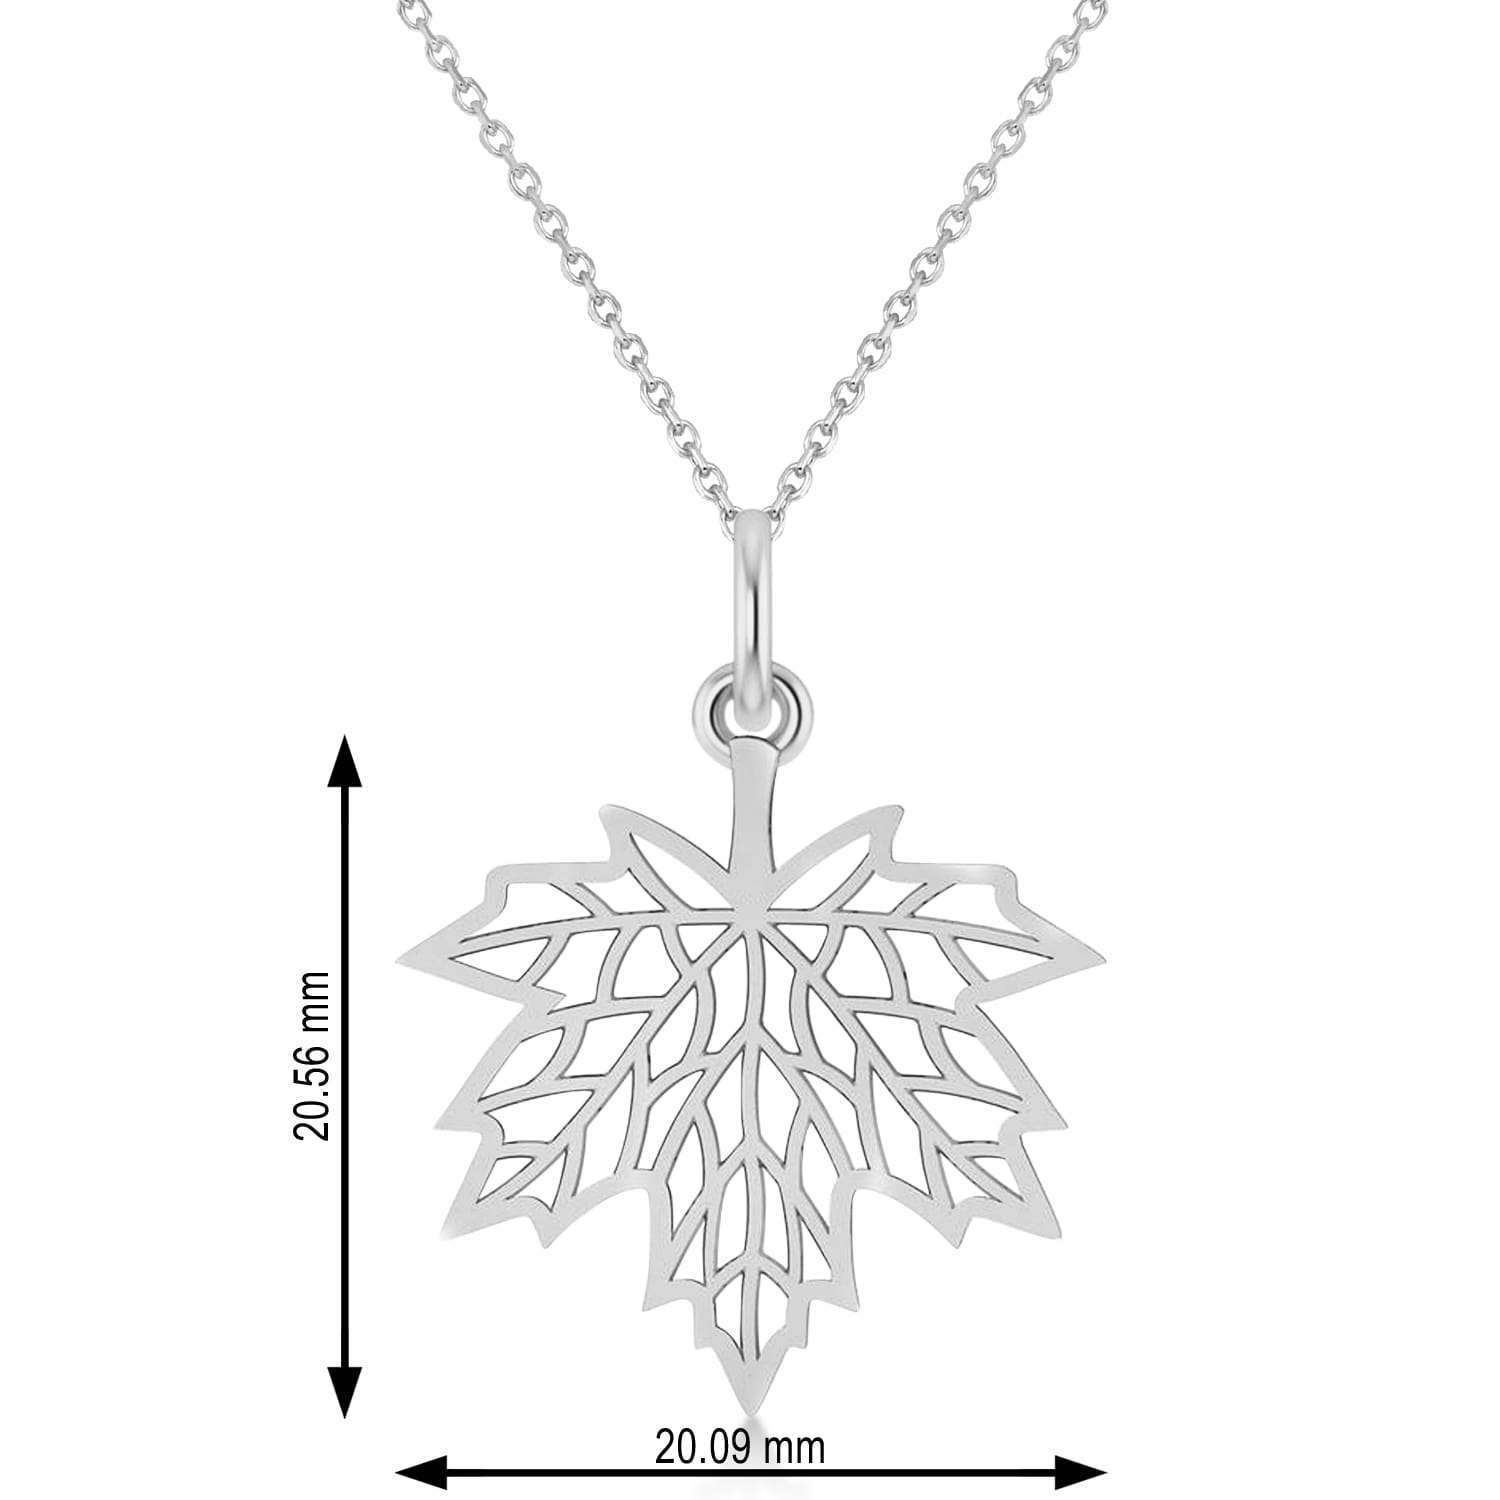 Maple Leaf Pendant Necklace 14k White Gold